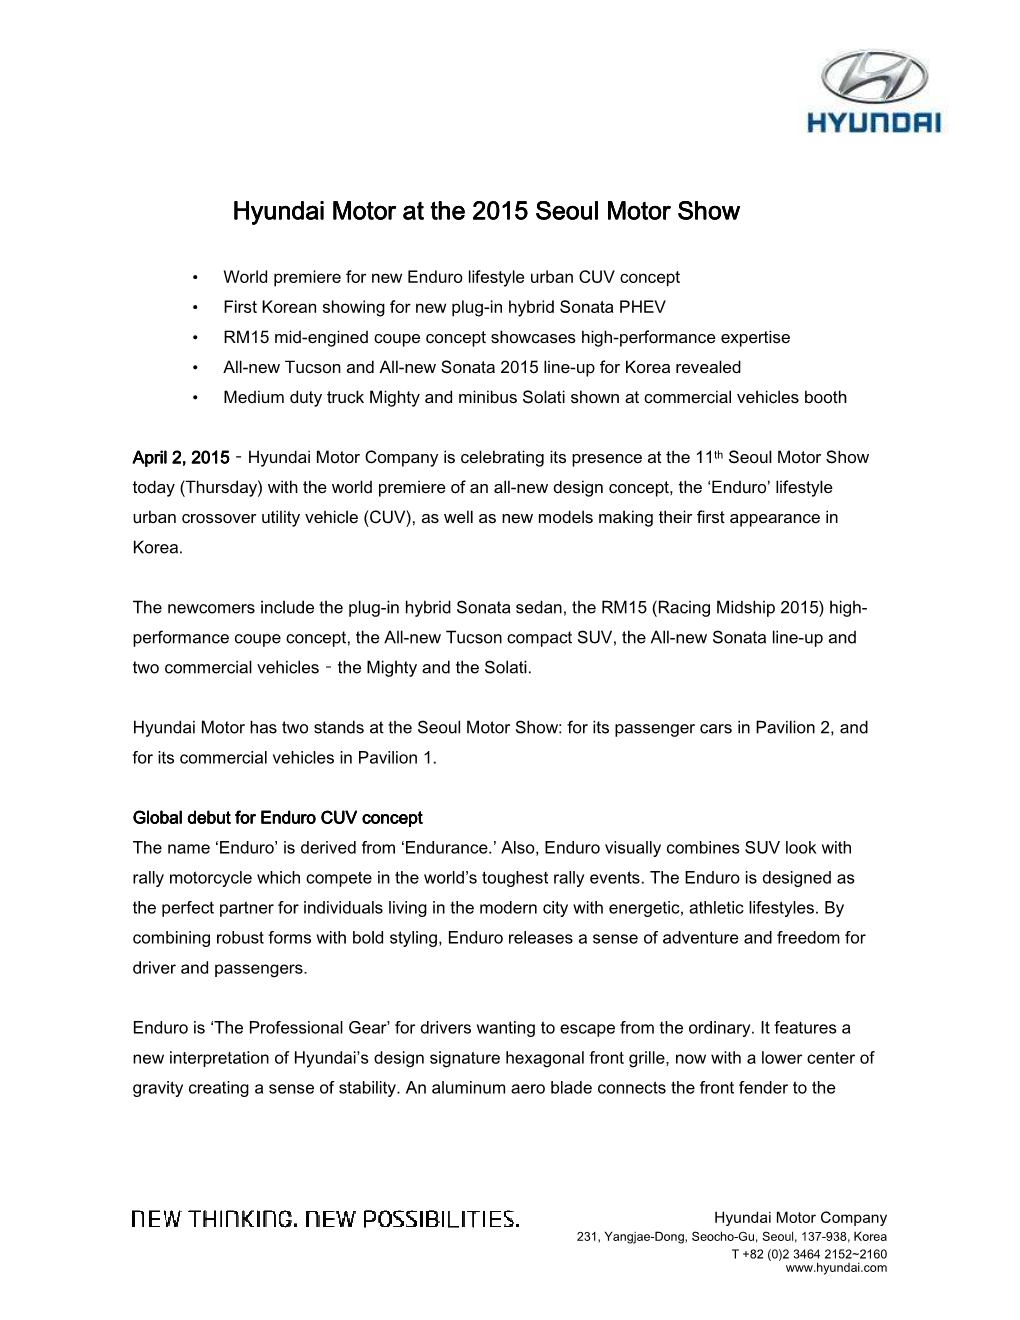 150402 Hyundai at the 2015 Seoul Motor Show